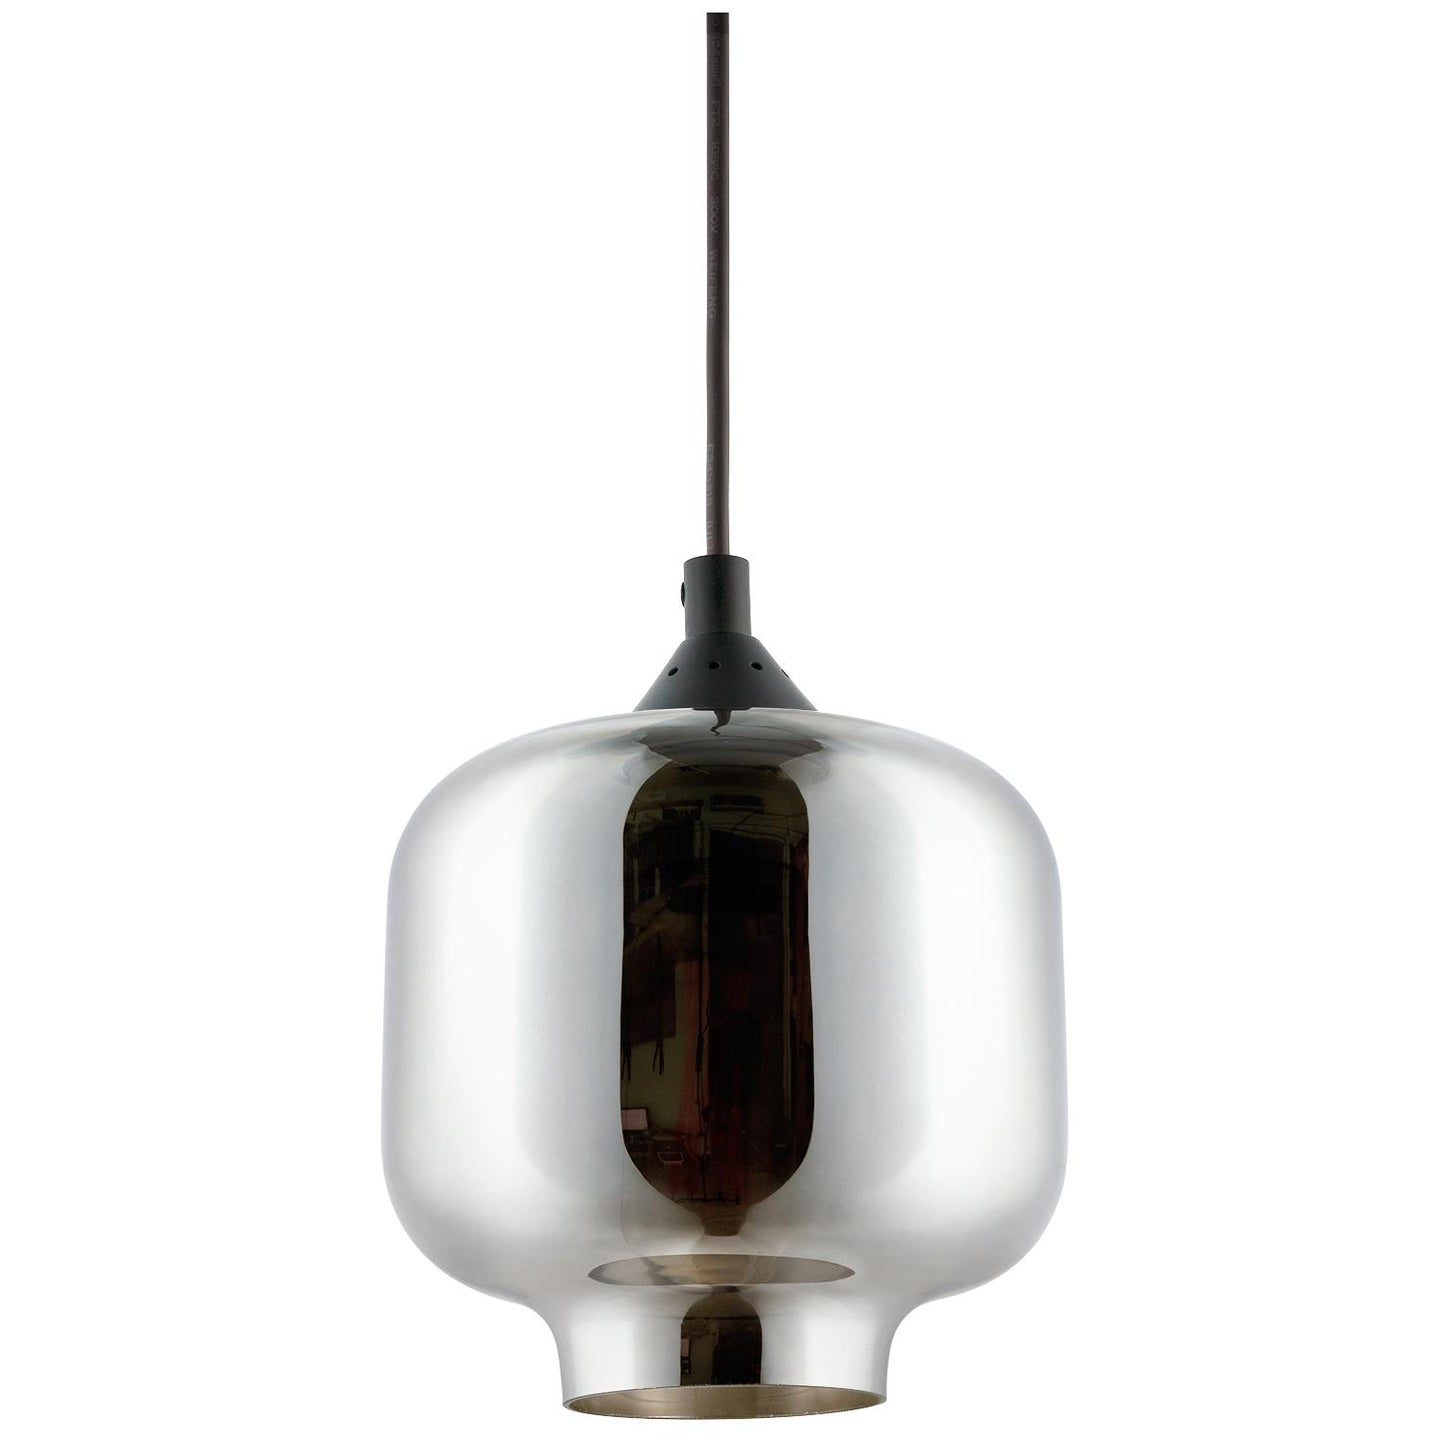 Sunlite 6.5" Tinted Glass Sphere Pendant Vintage Antique Style Fixture